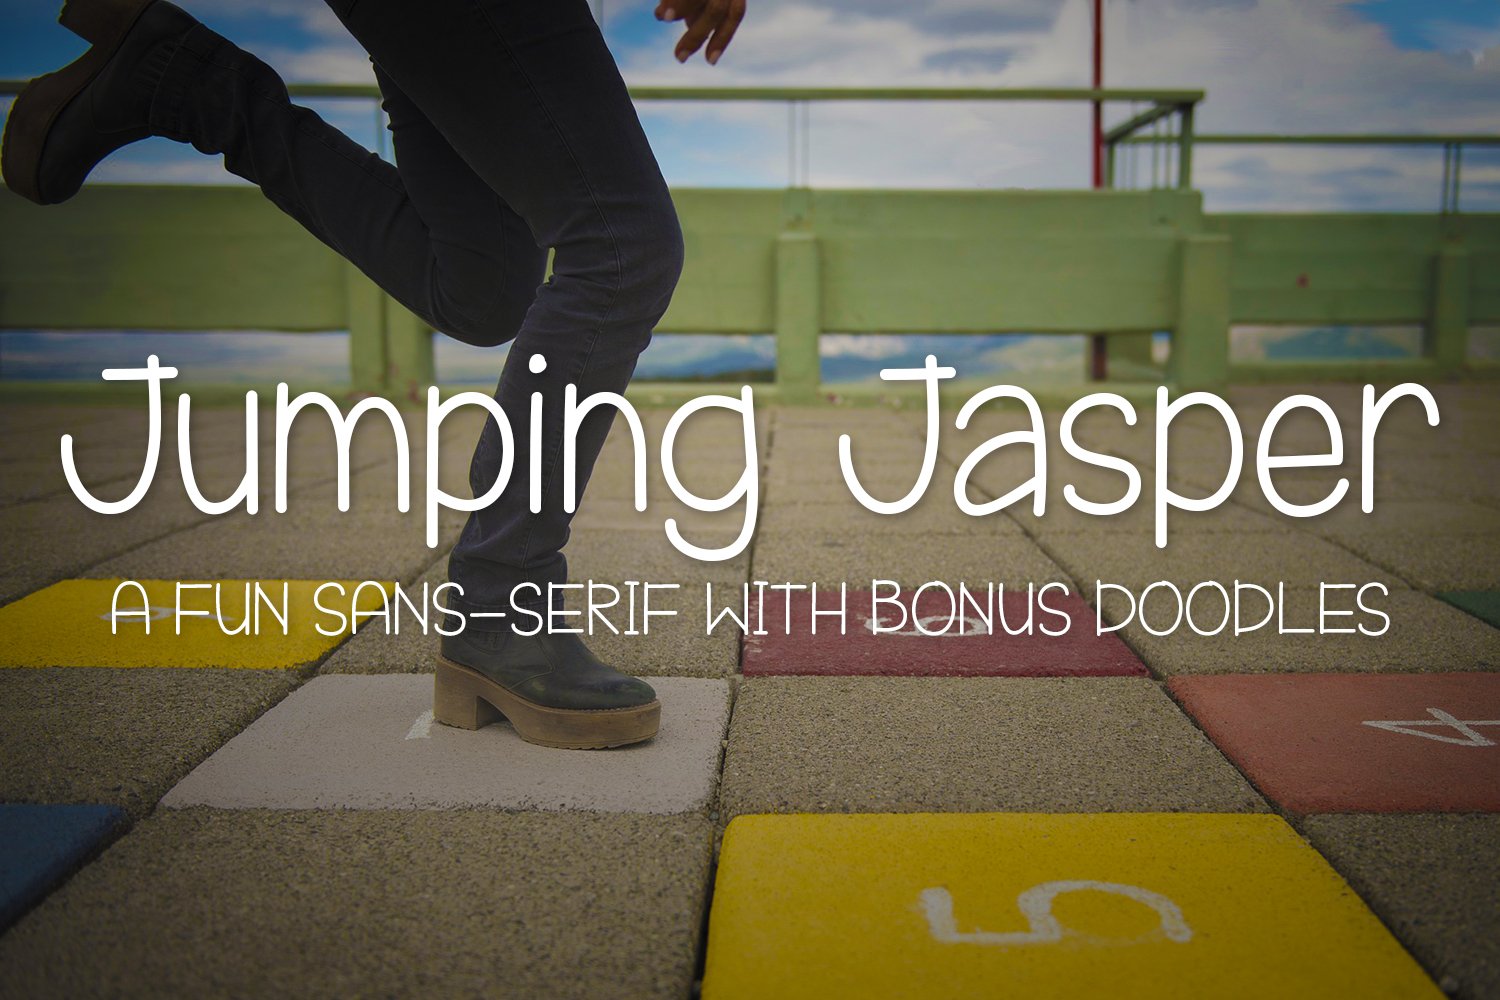 Jumping Jasper cover image.